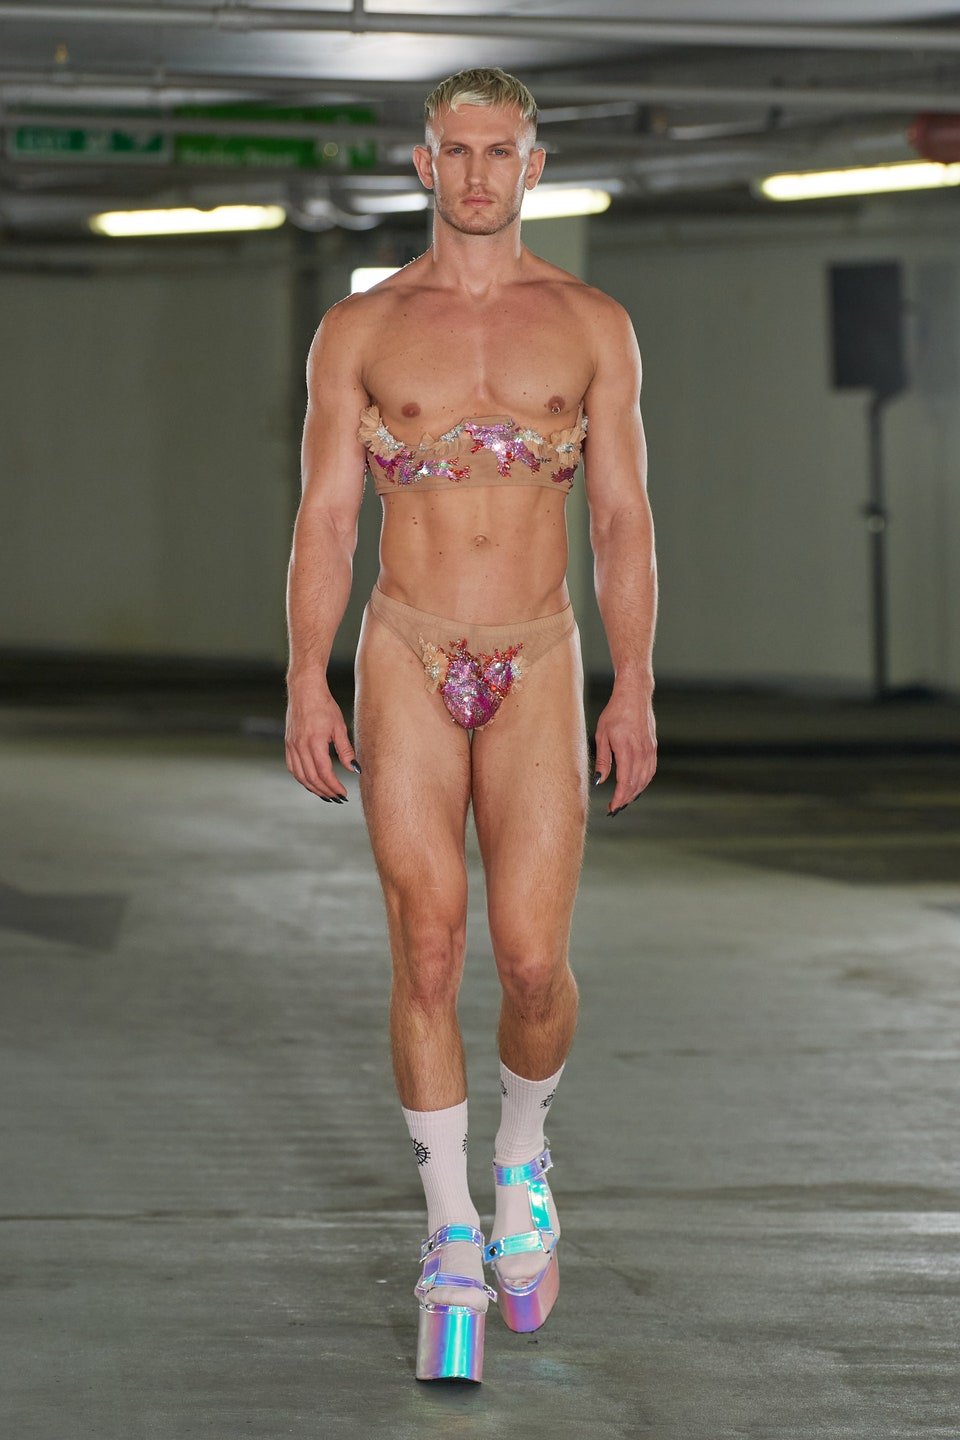 alex mountis share male naked fashion show photos